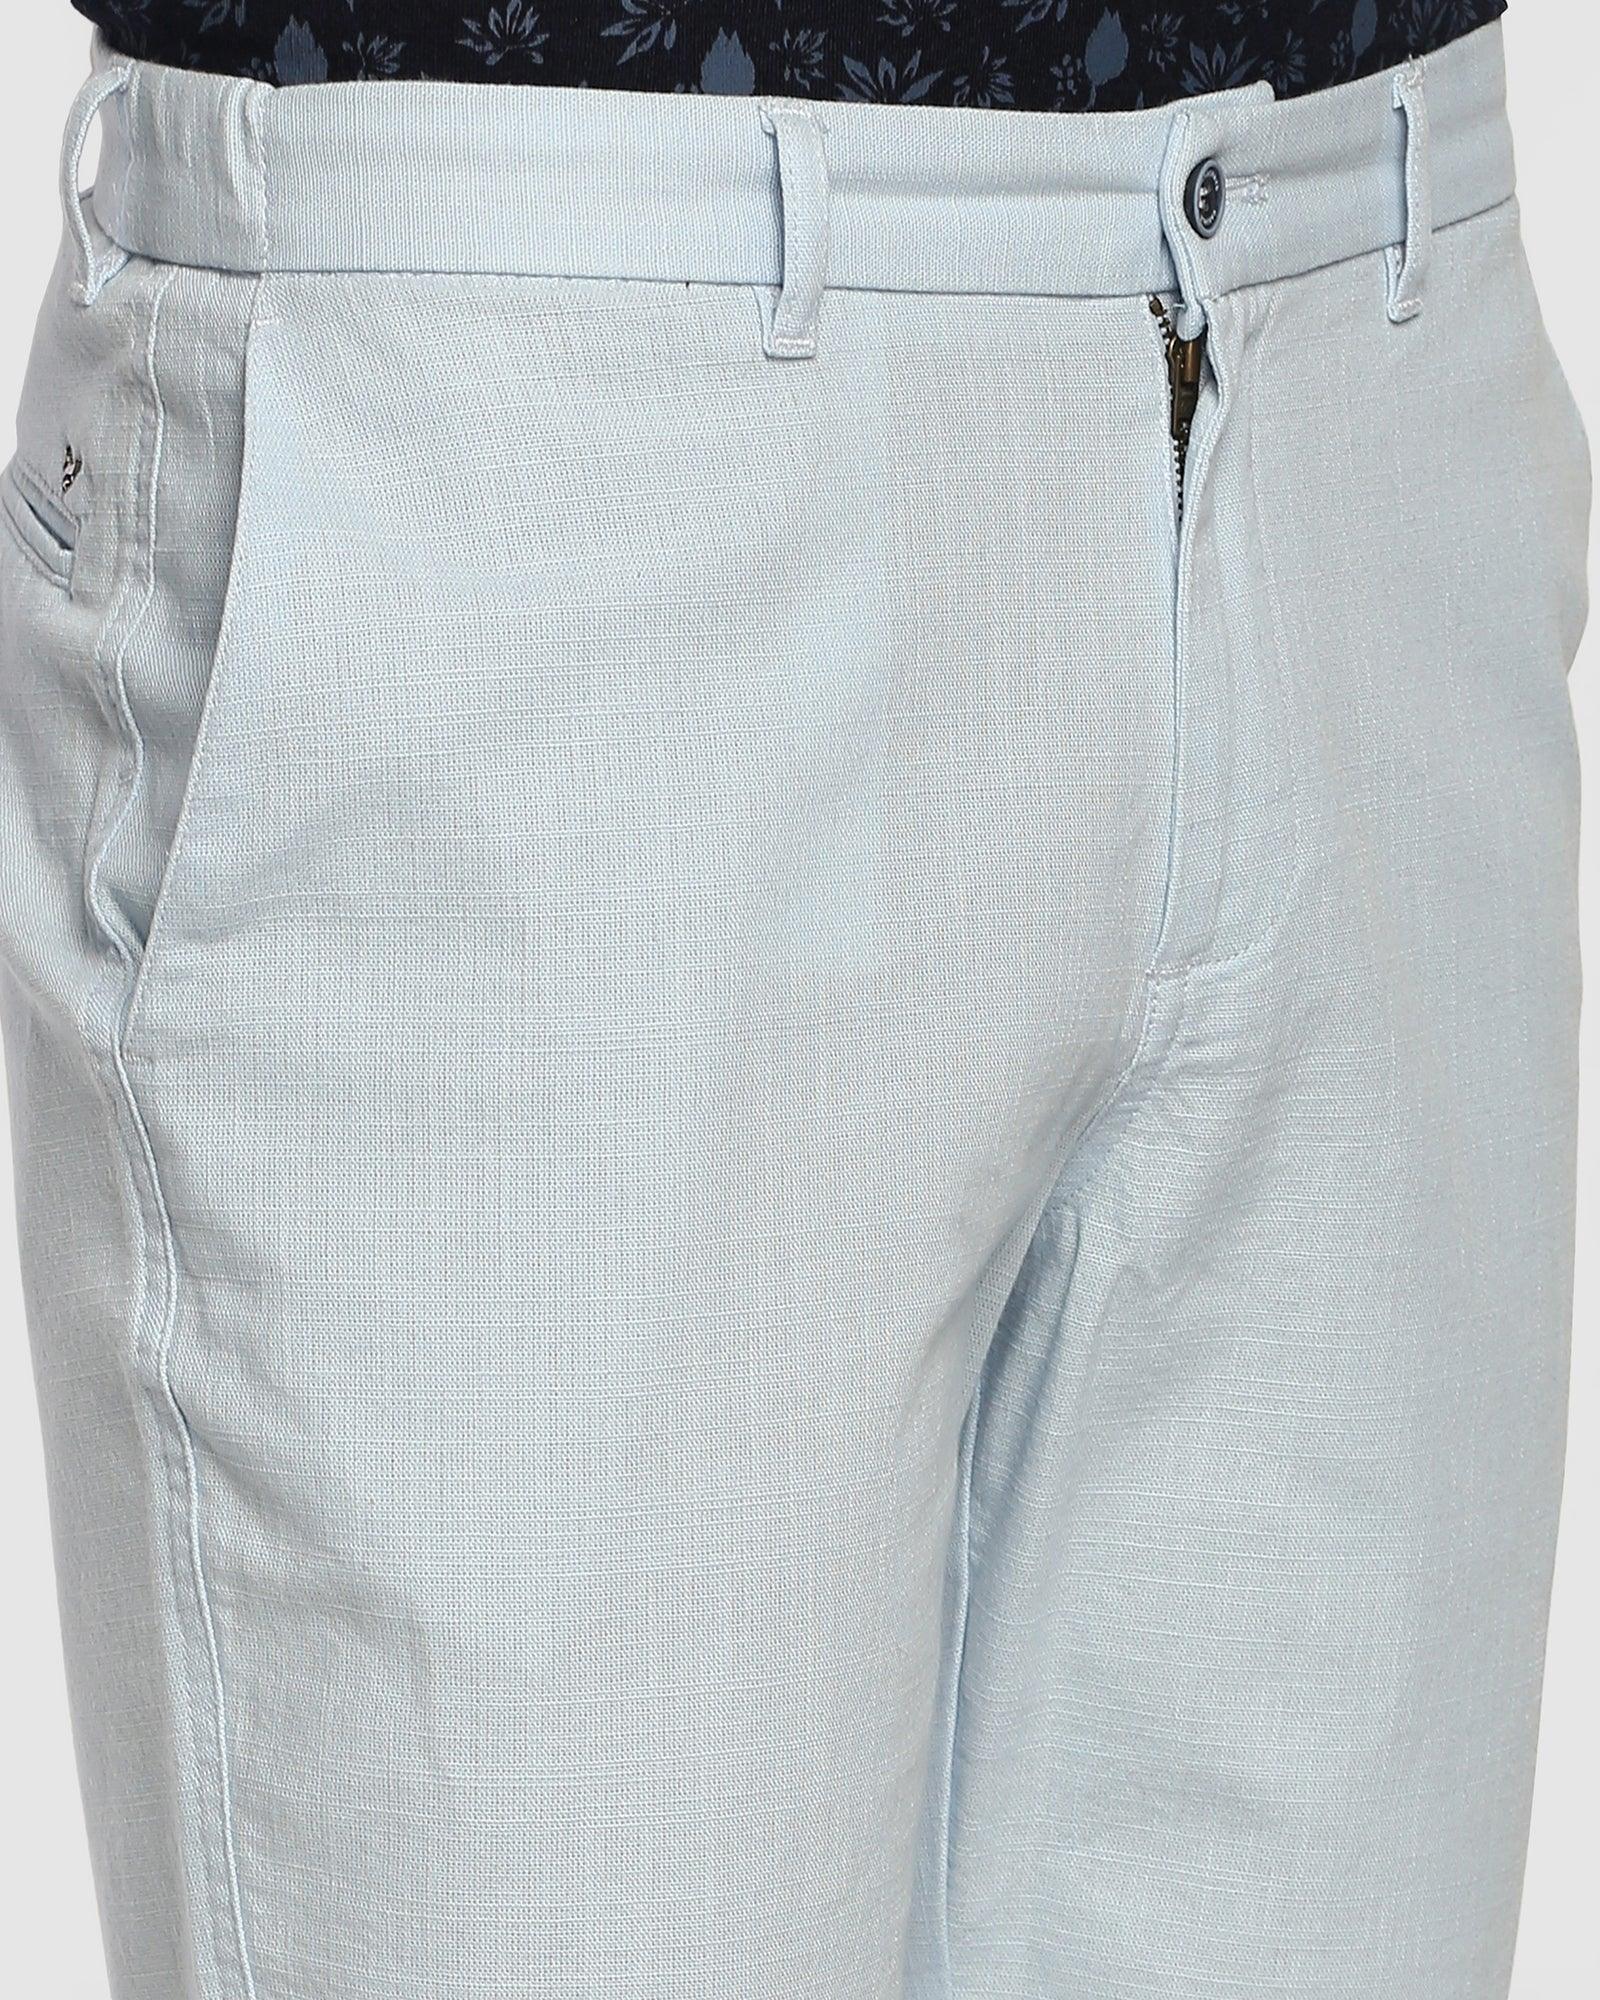 Casual Light Blue Solid Shorts - Com